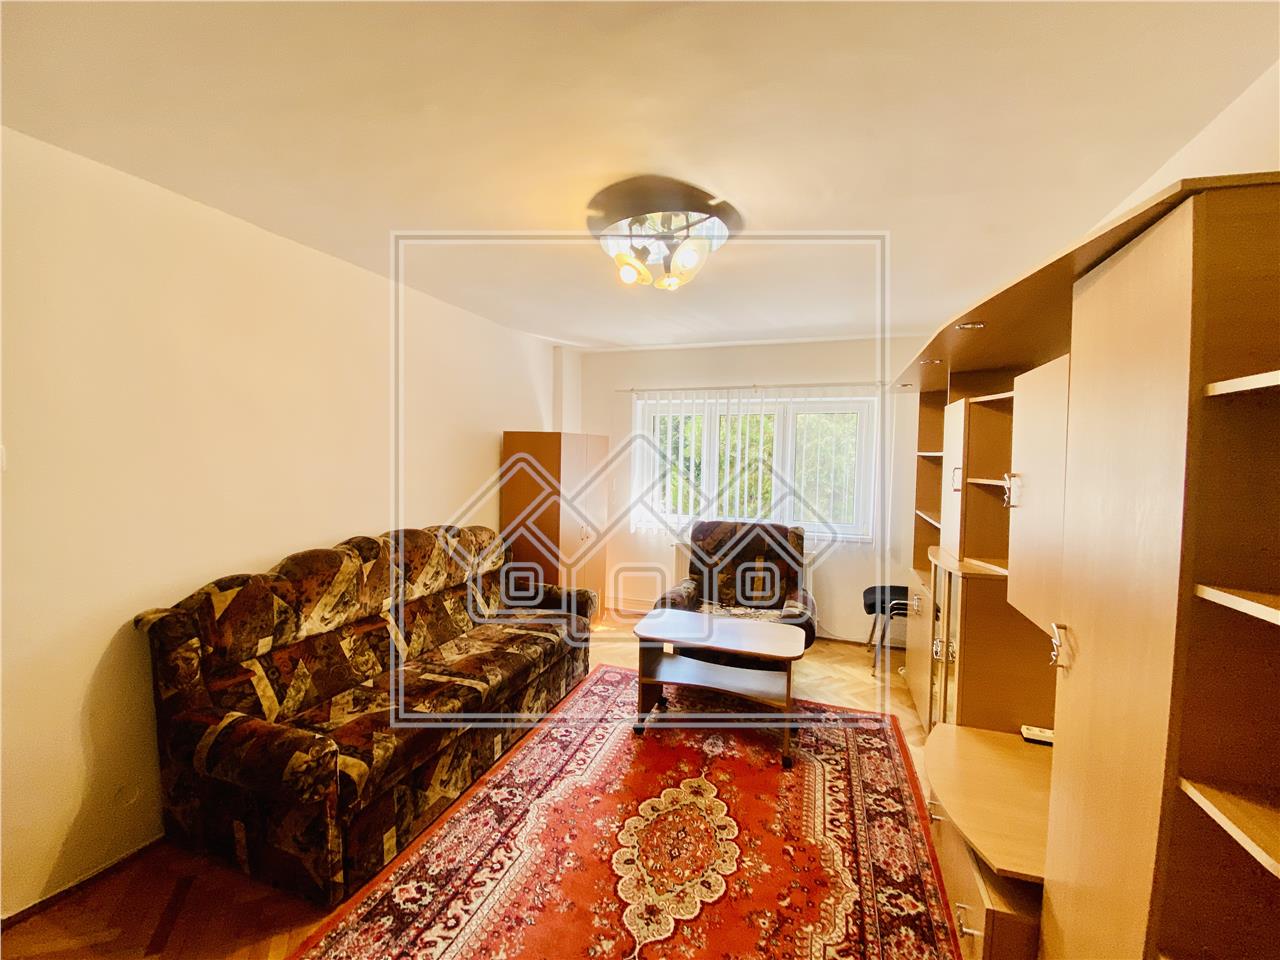 Apartament de vanzare in Sibiu - 3 camere,2 bai, pivnita - Siretului